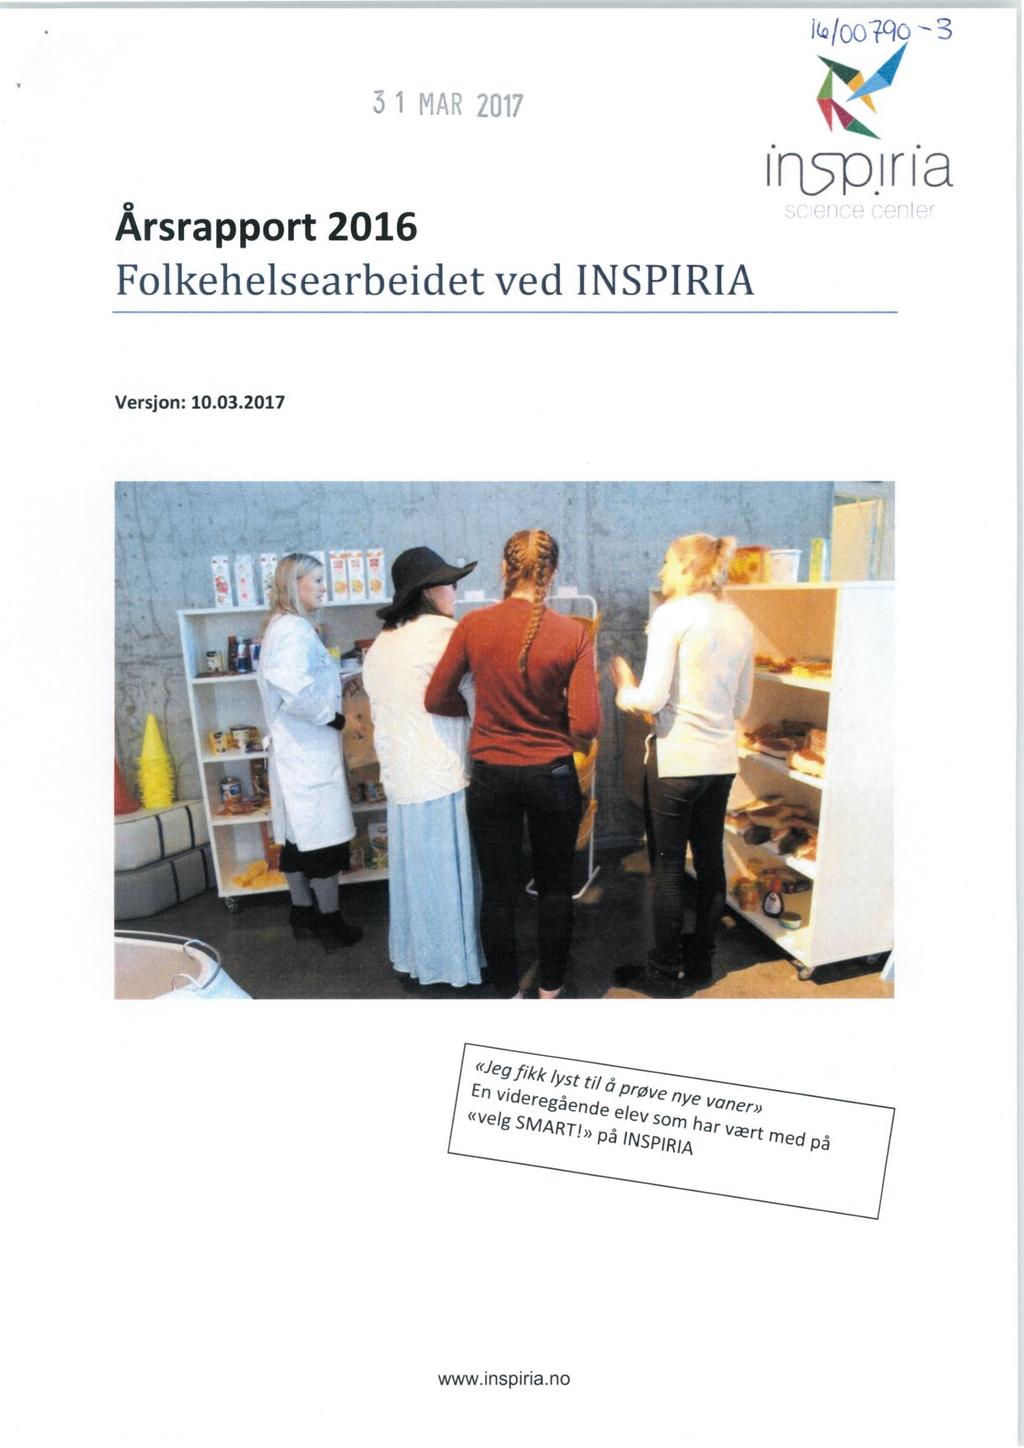 its/qc) Mo ` 3 Årsrapport 2016 Fokehesearbeidet ved INSPIRIA I'r1Sp,IrI'a